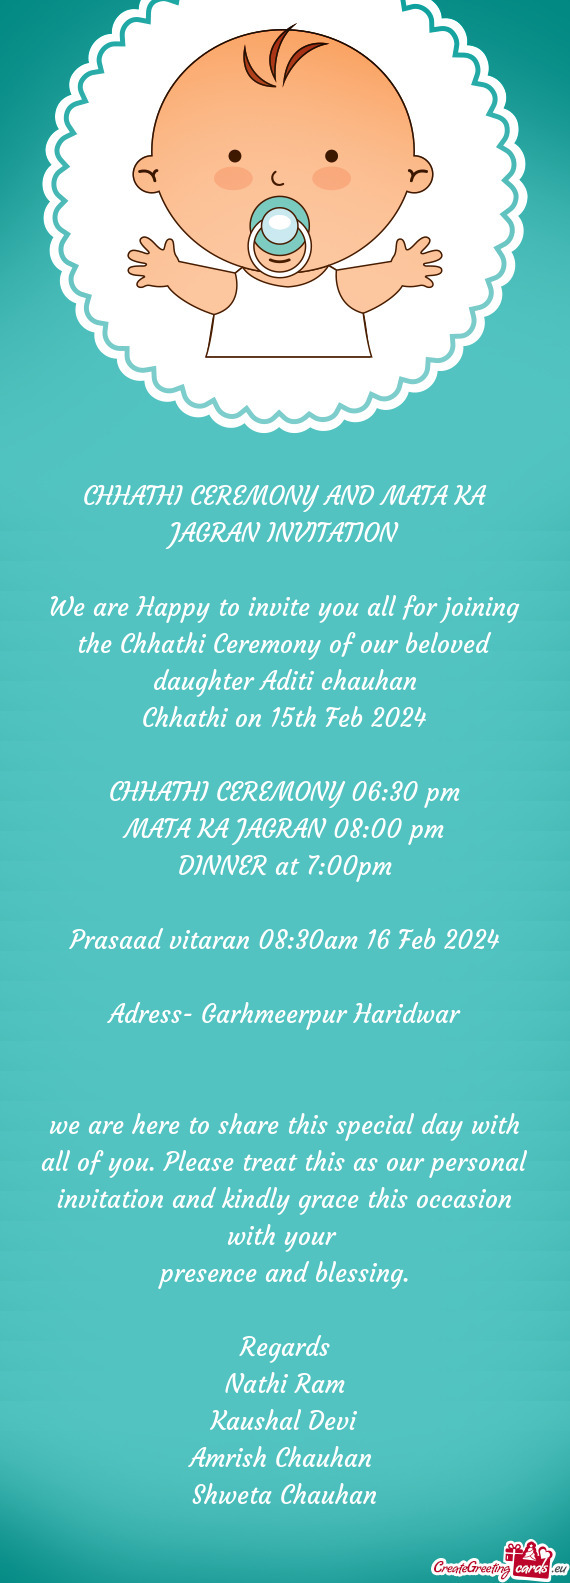 CHHATHI CEREMONY AND MATA KA JAGRAN INVITATION